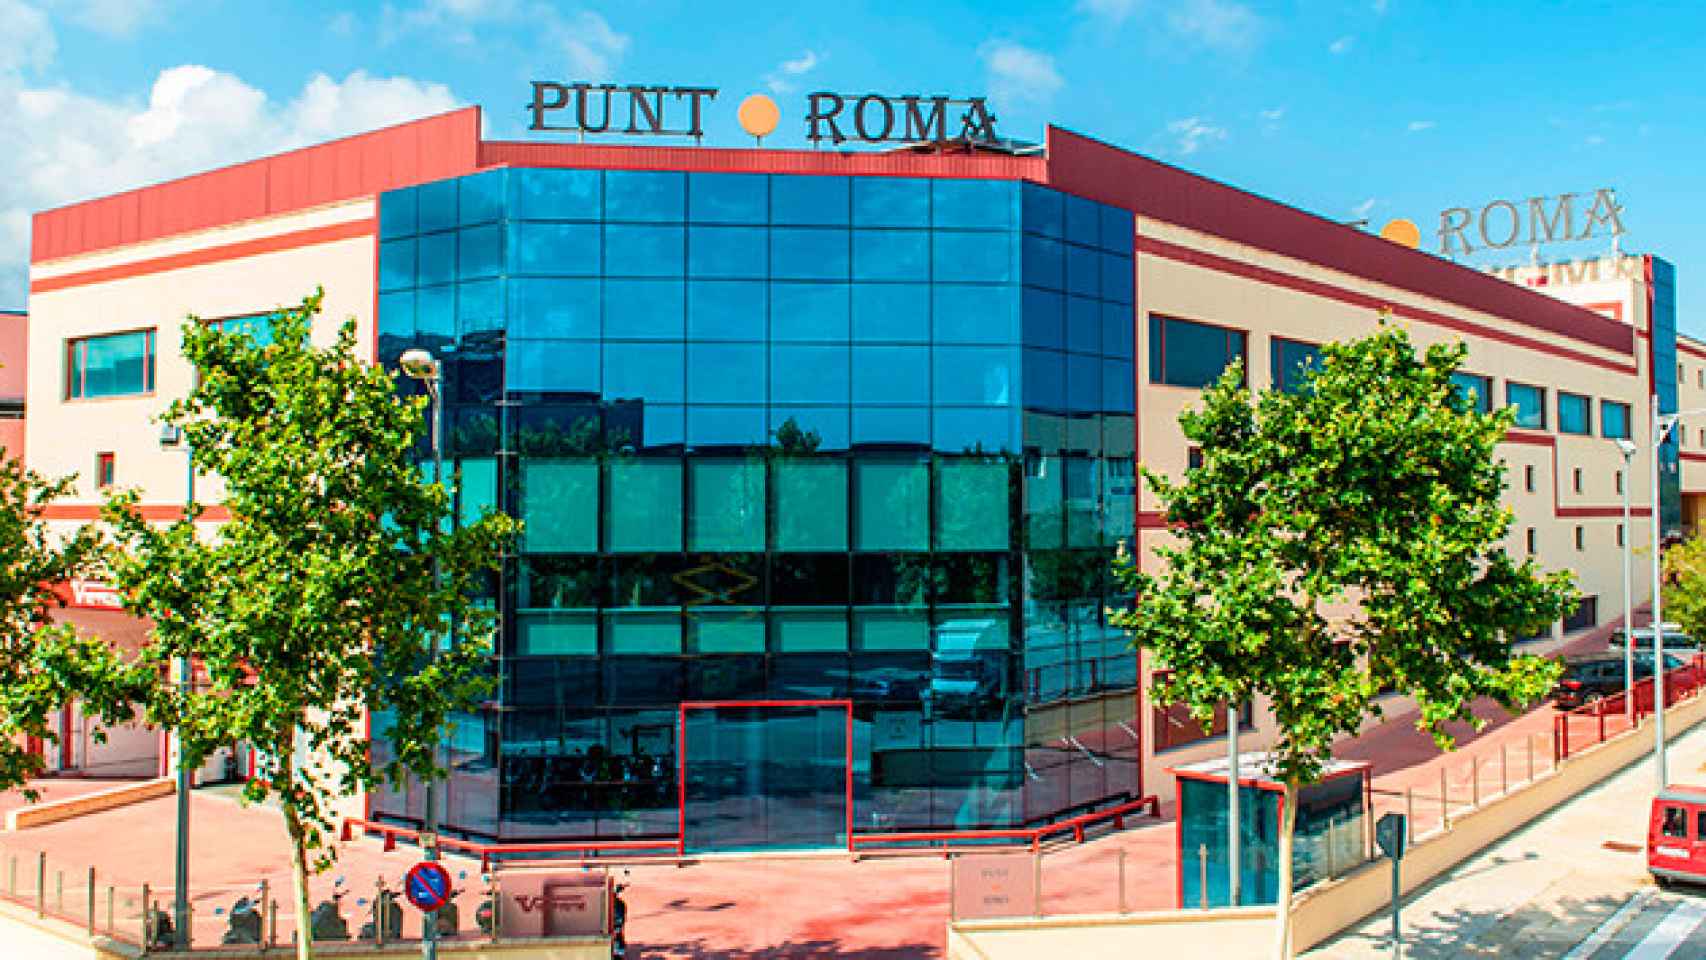 Oficinas centrales de Punt Roma en Mataró (Barcelona) / PUNT ROMA